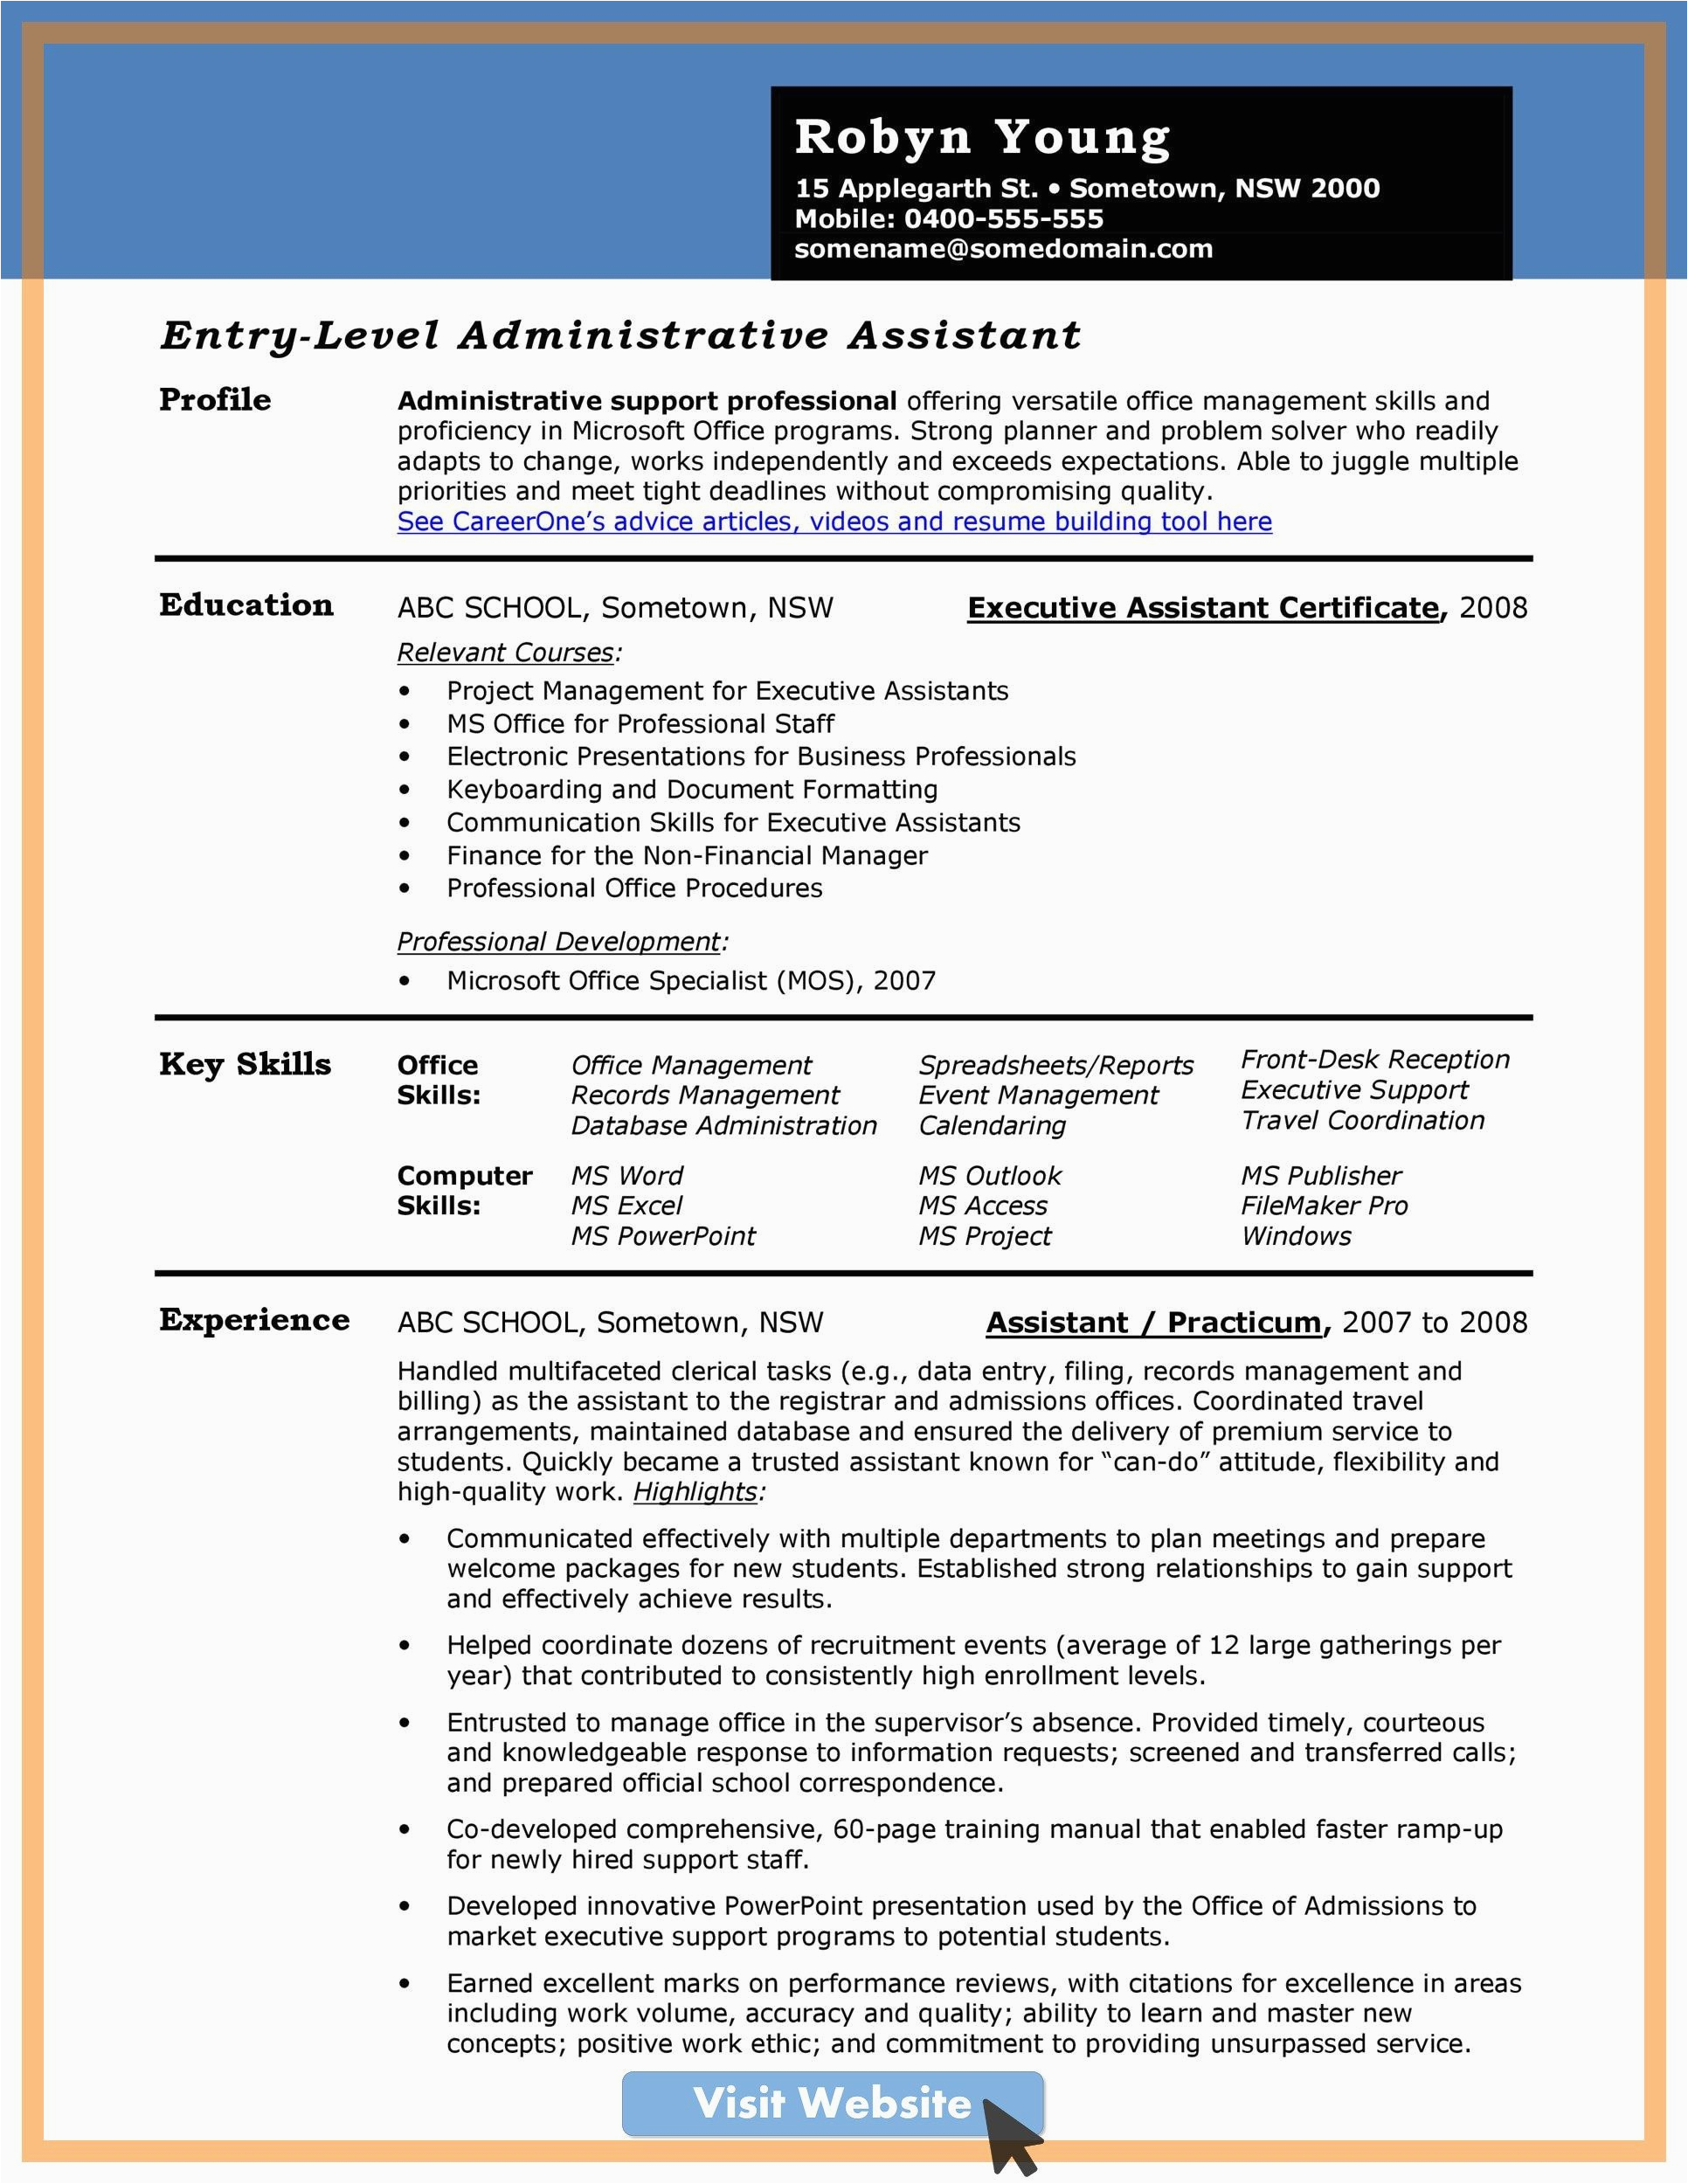 Skills Based Resume Template Administrative assistant Listing Administrative Skills Resume Resume Administrative